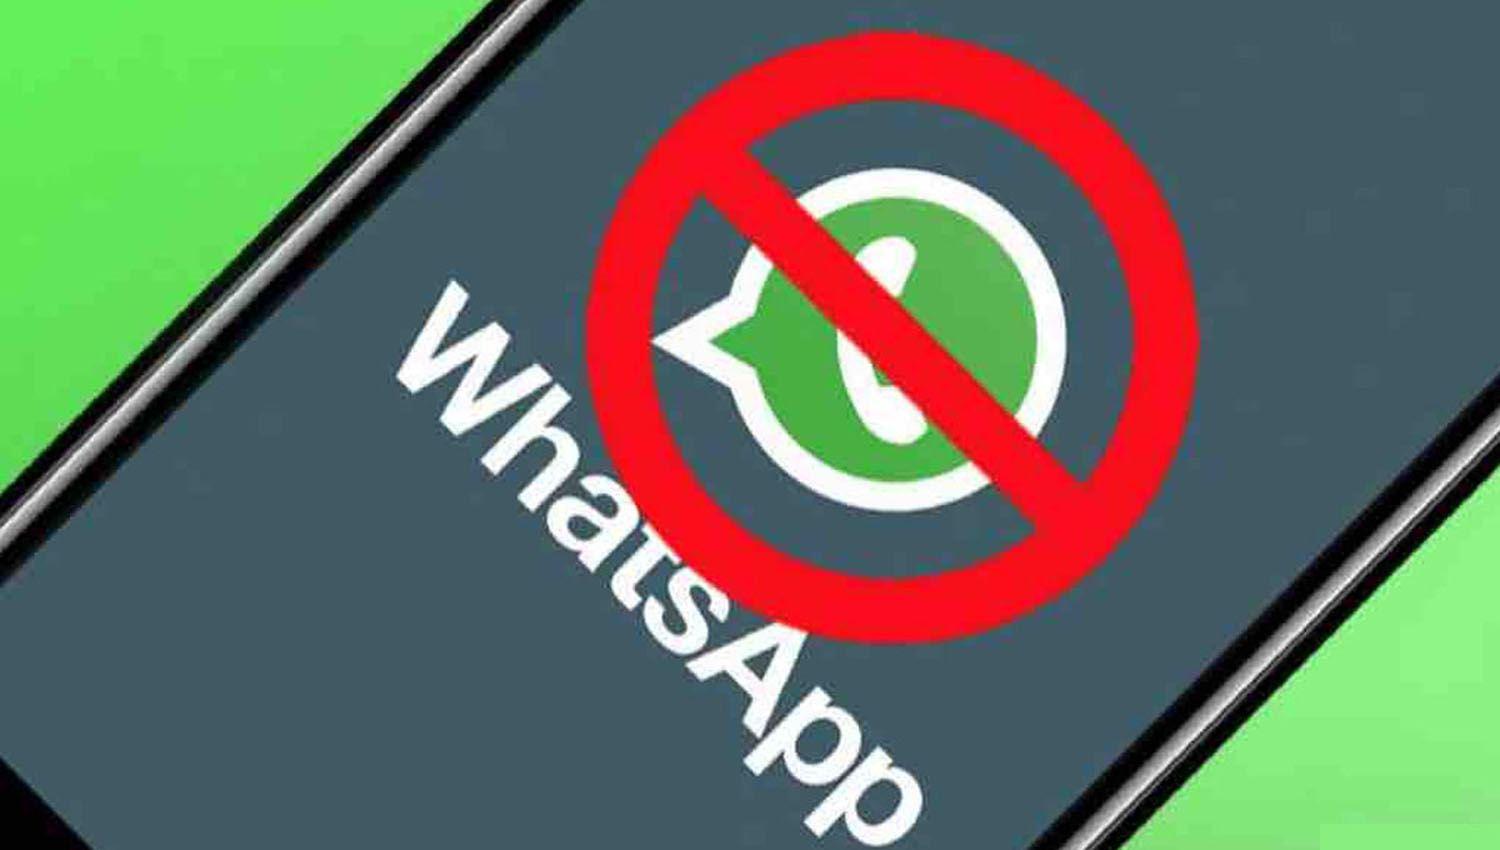 Whatsapp- iquestCoacutemo saber si me bloquearon